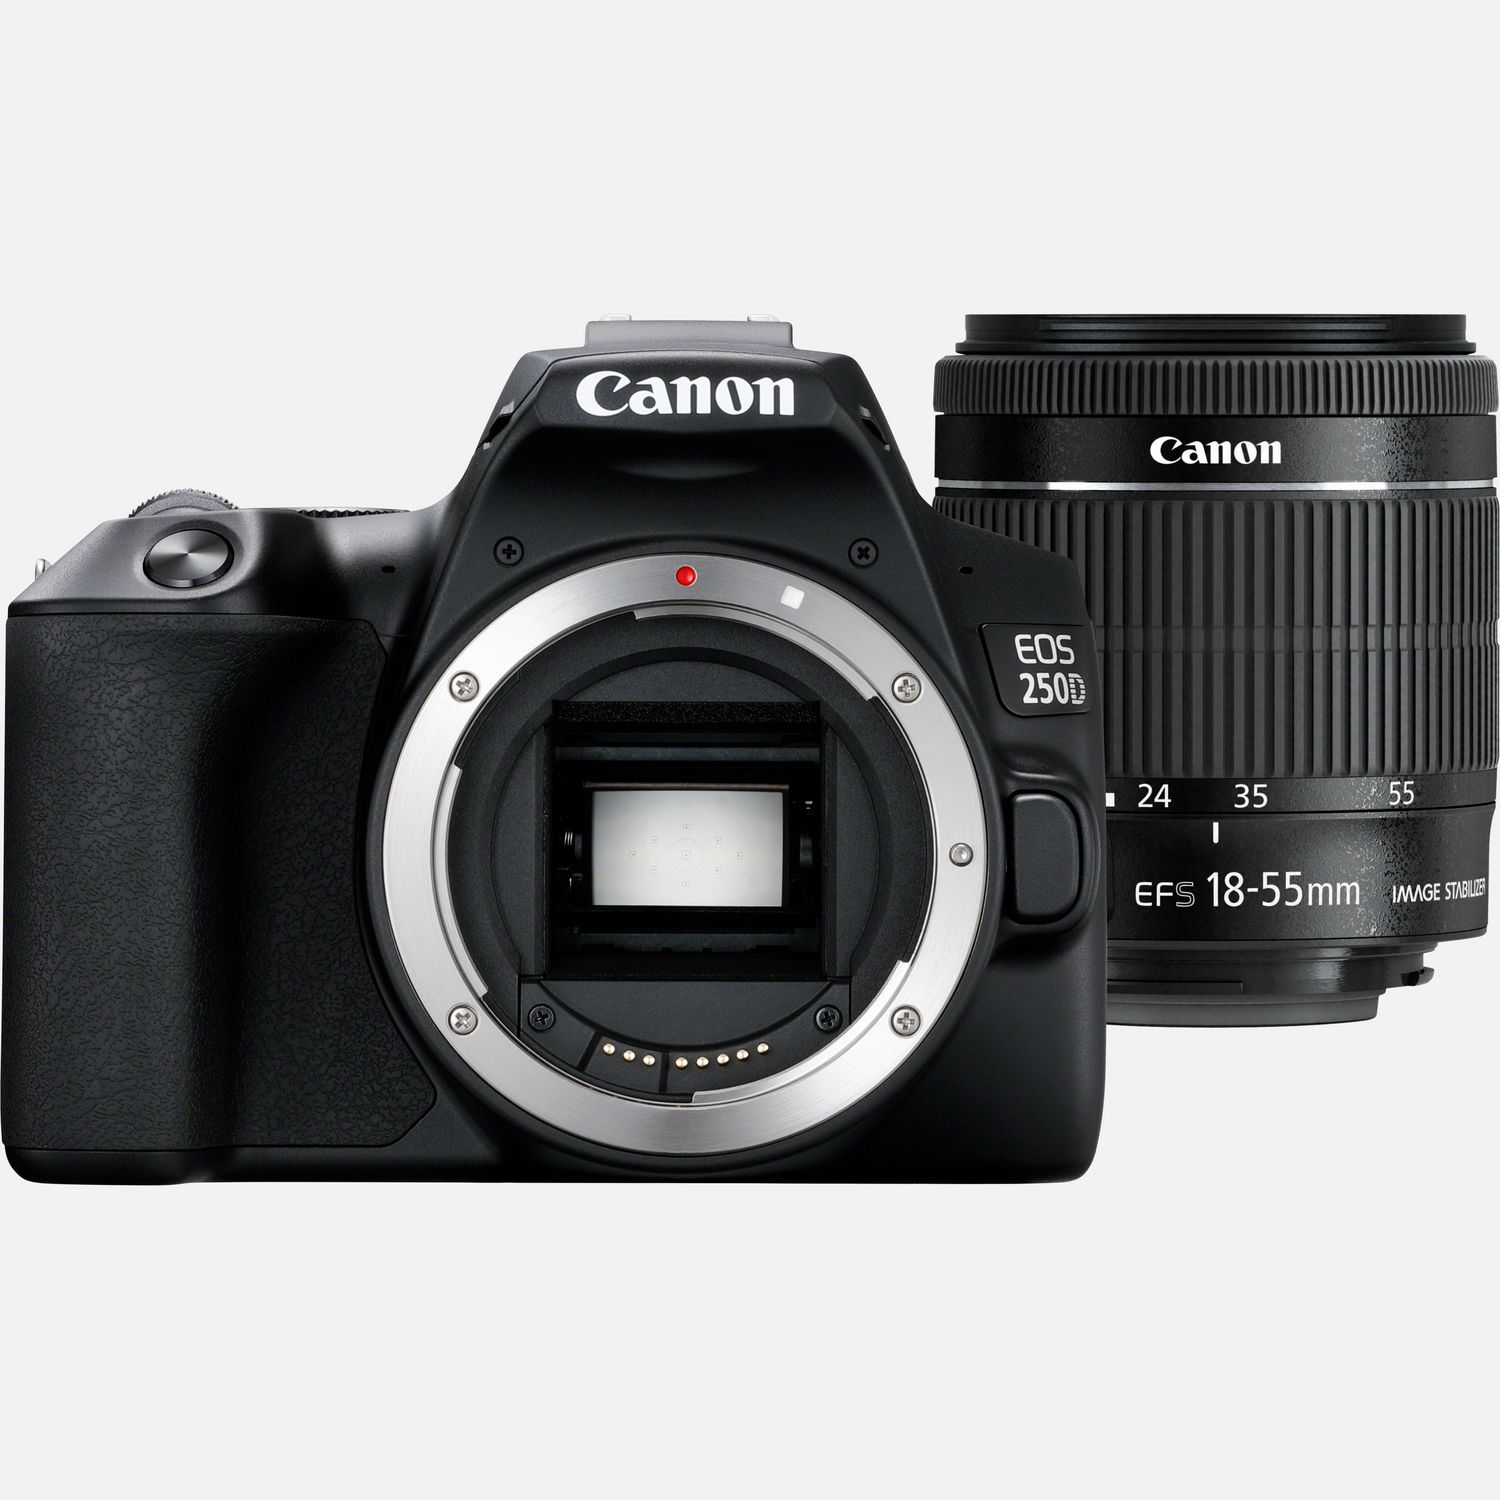 Cámara réflex Canon EOS 2000D + Objetivo EF-S 18-55 mm DC